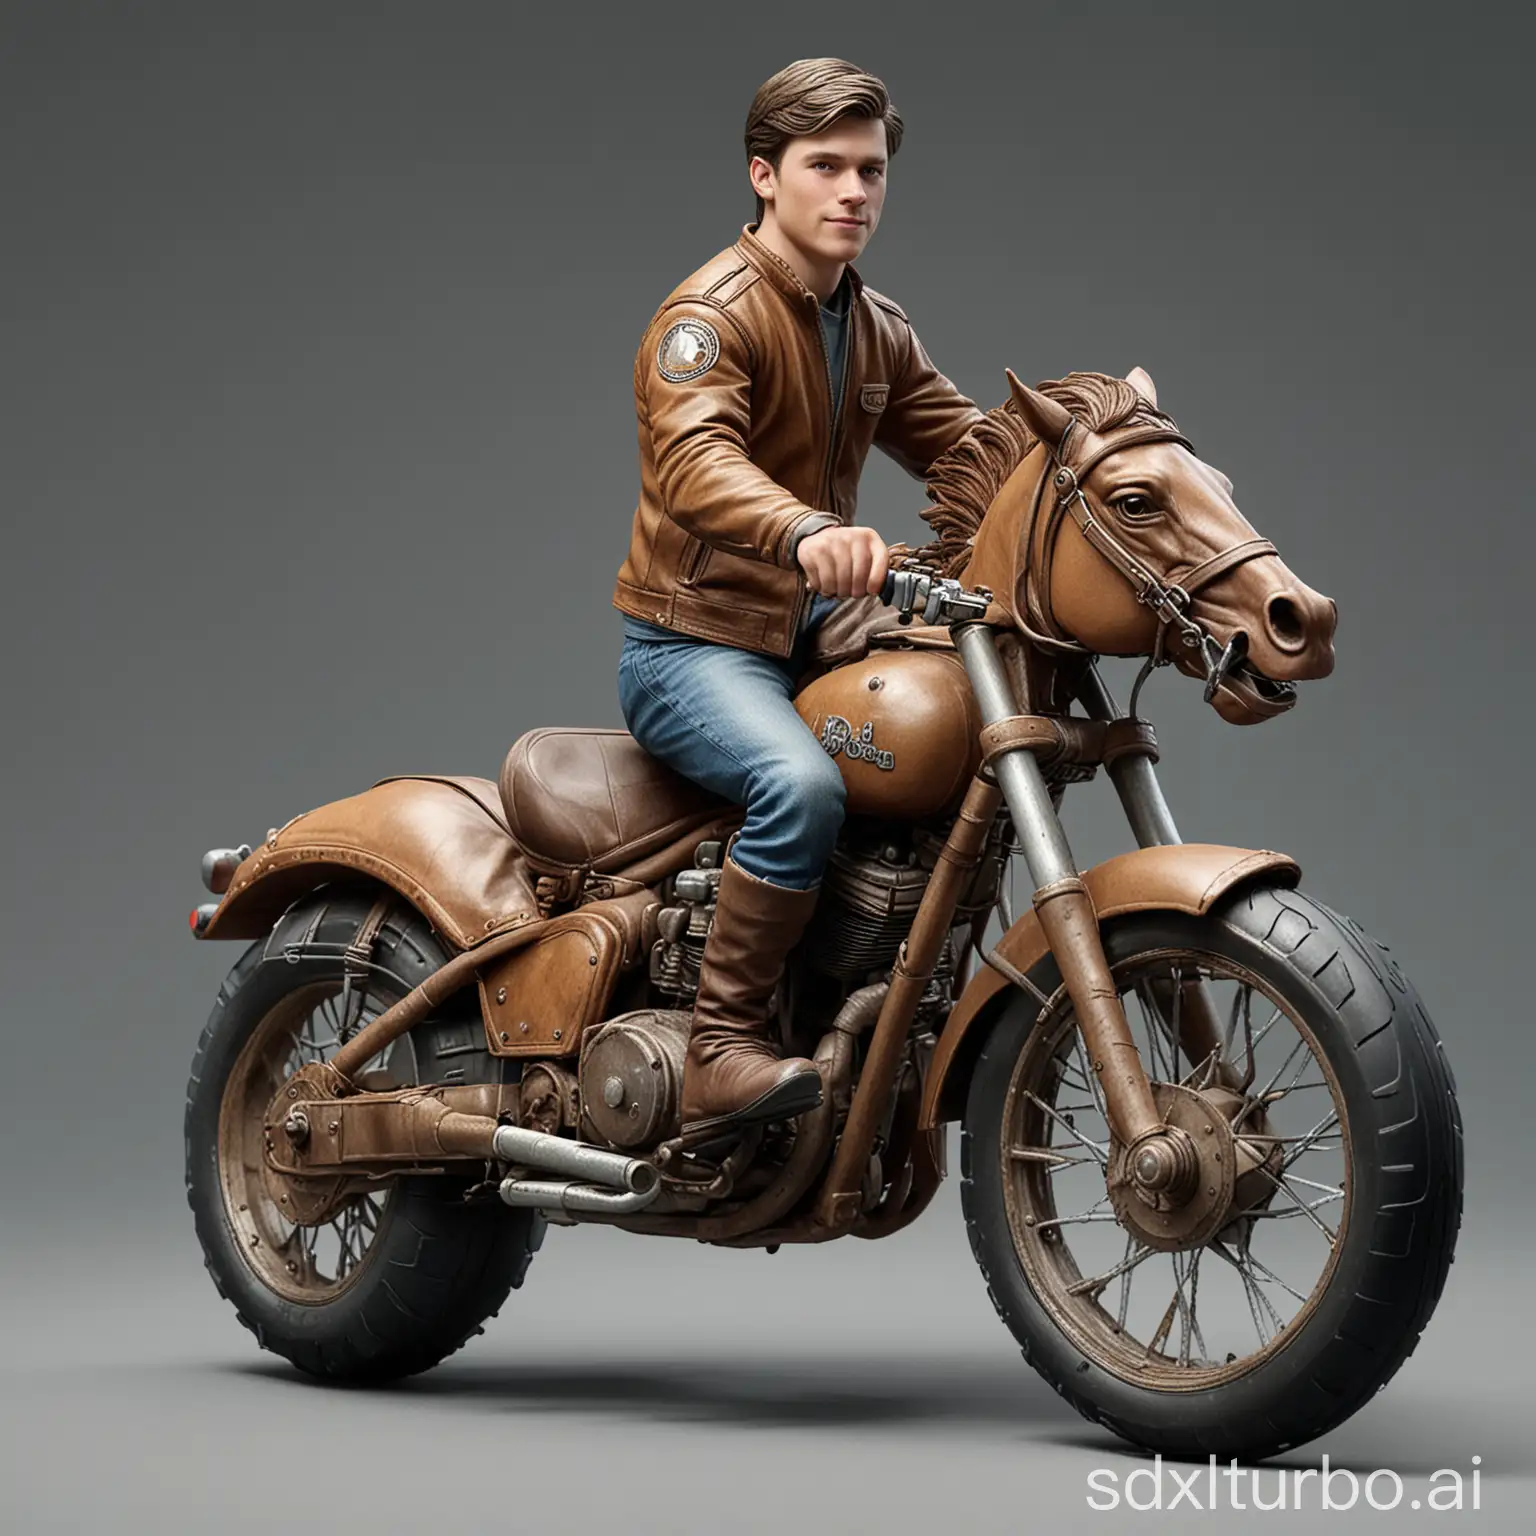 Realistic-8K-Image-18YearOld-Wade-Riding-a-HorseShaped-Motorcycle